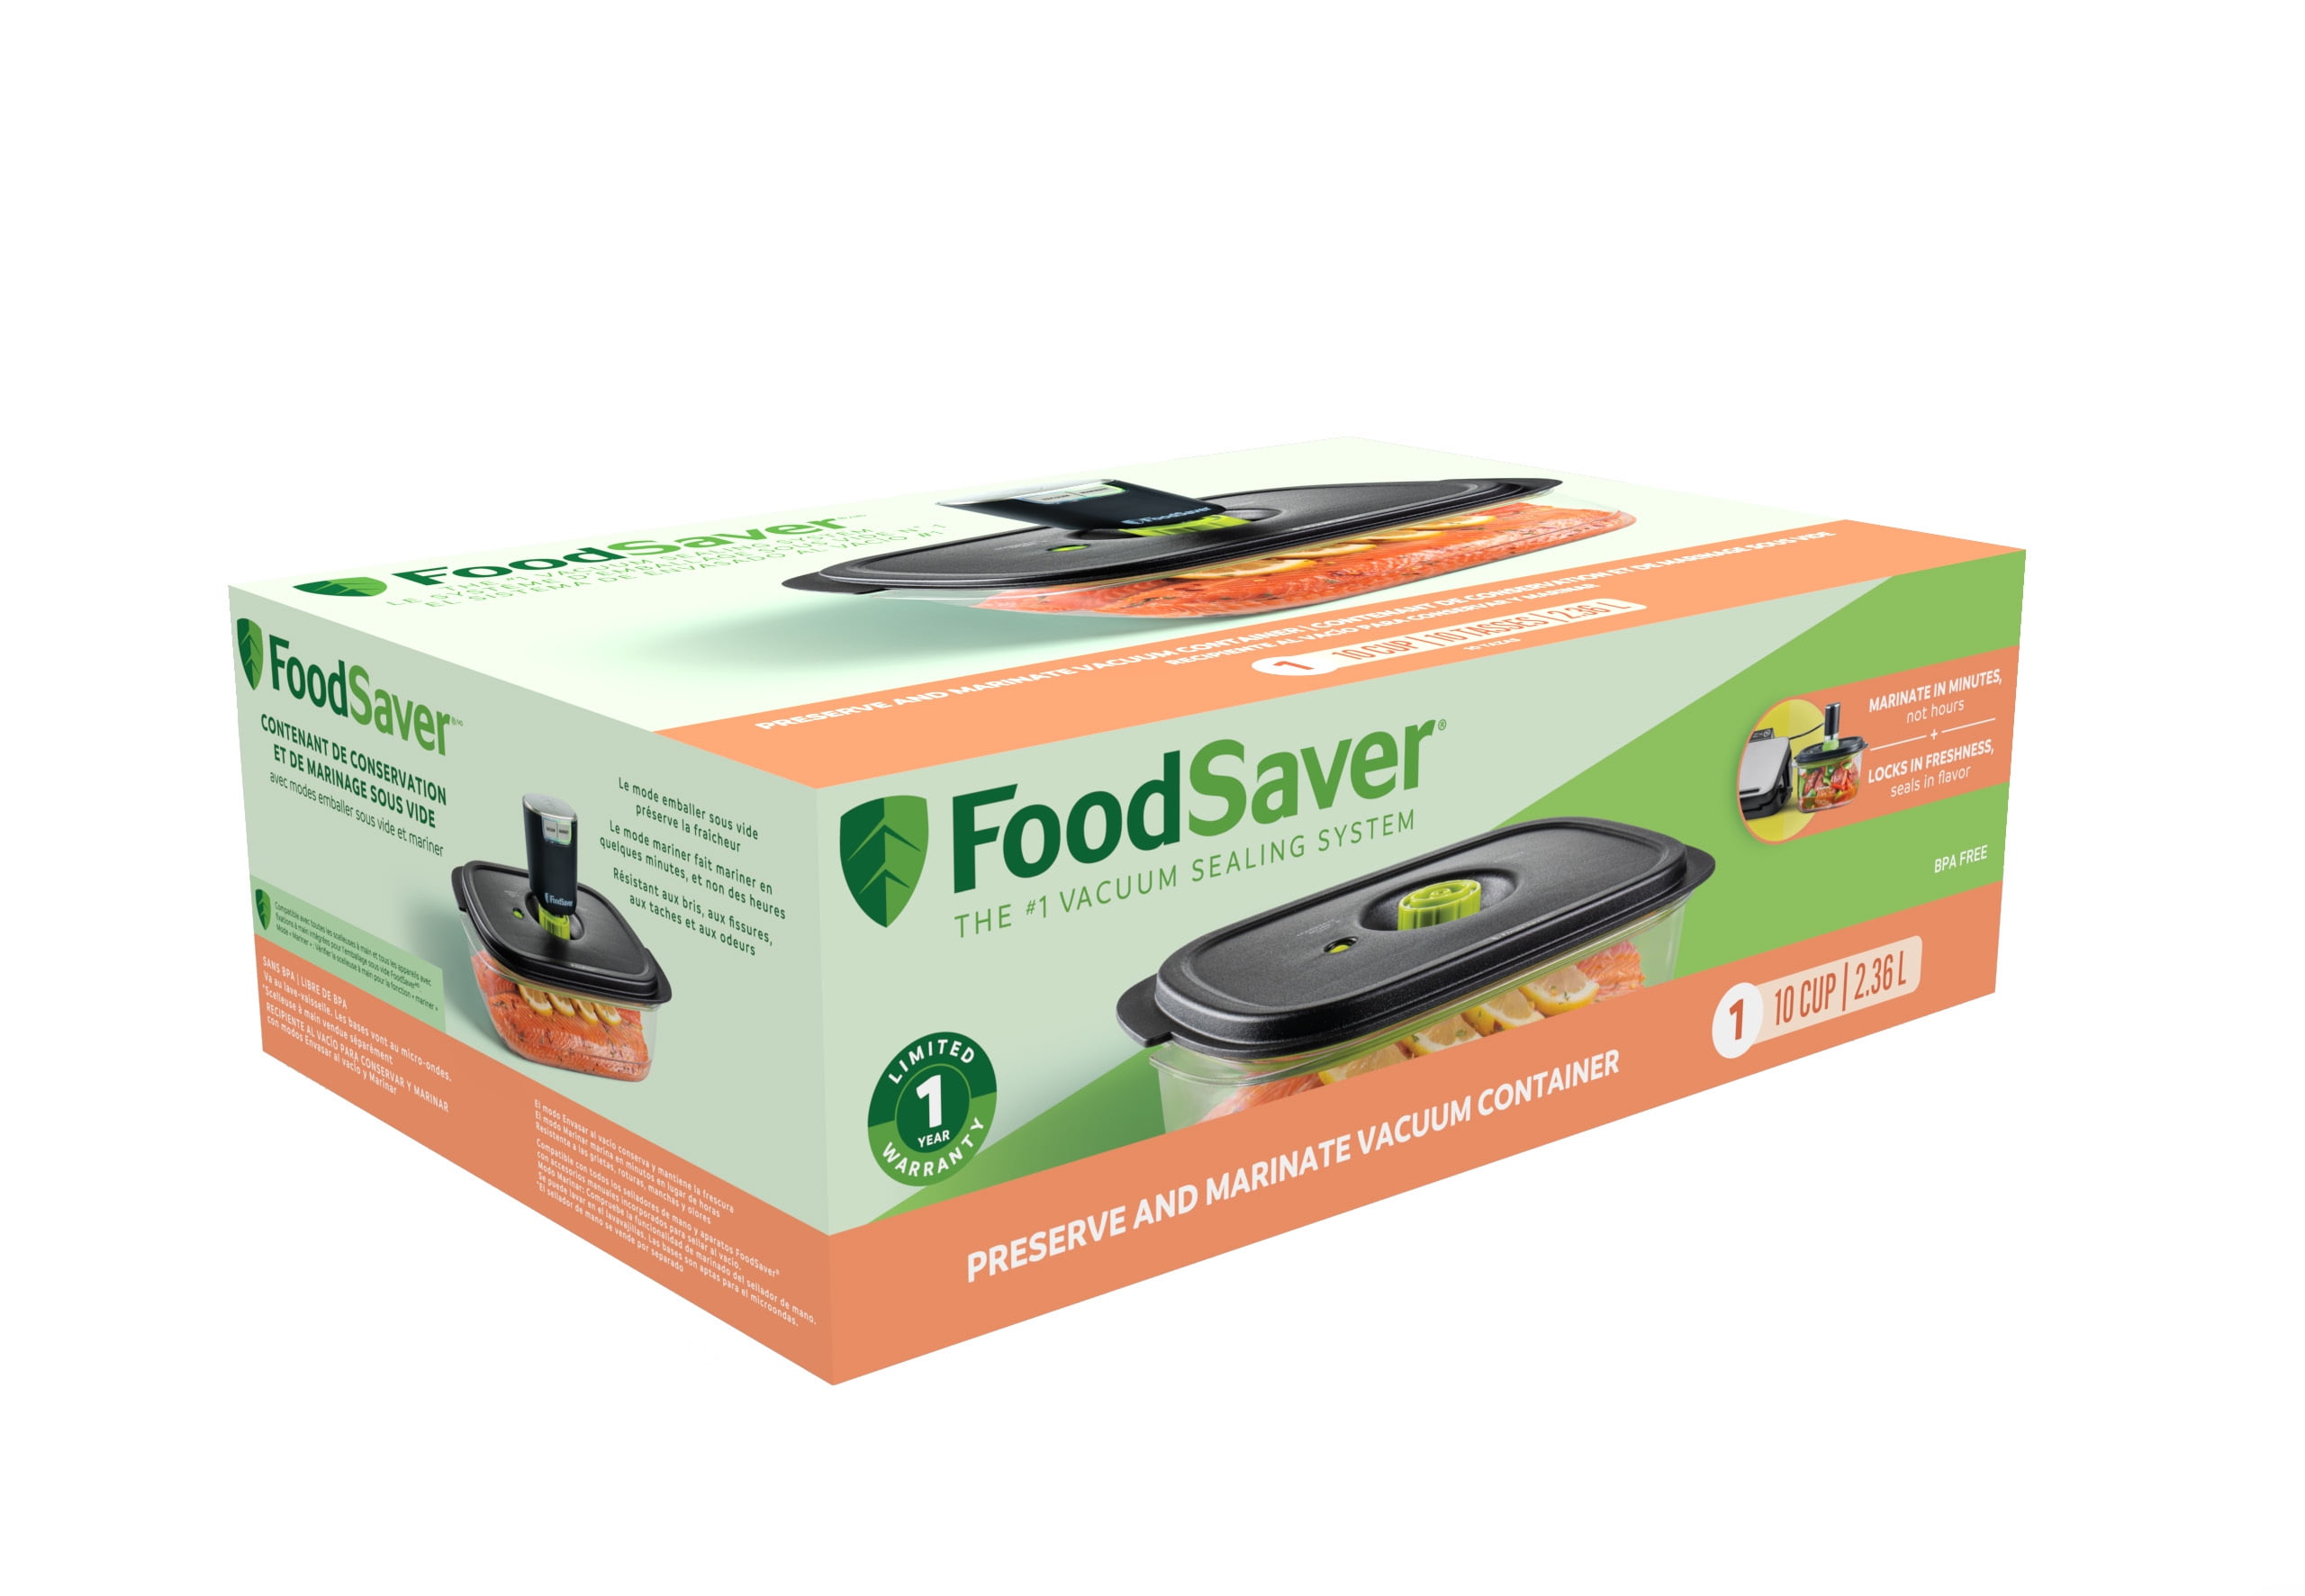 FoodSaver® Preserve & Marinate Vacuum Containers, 10 Cup